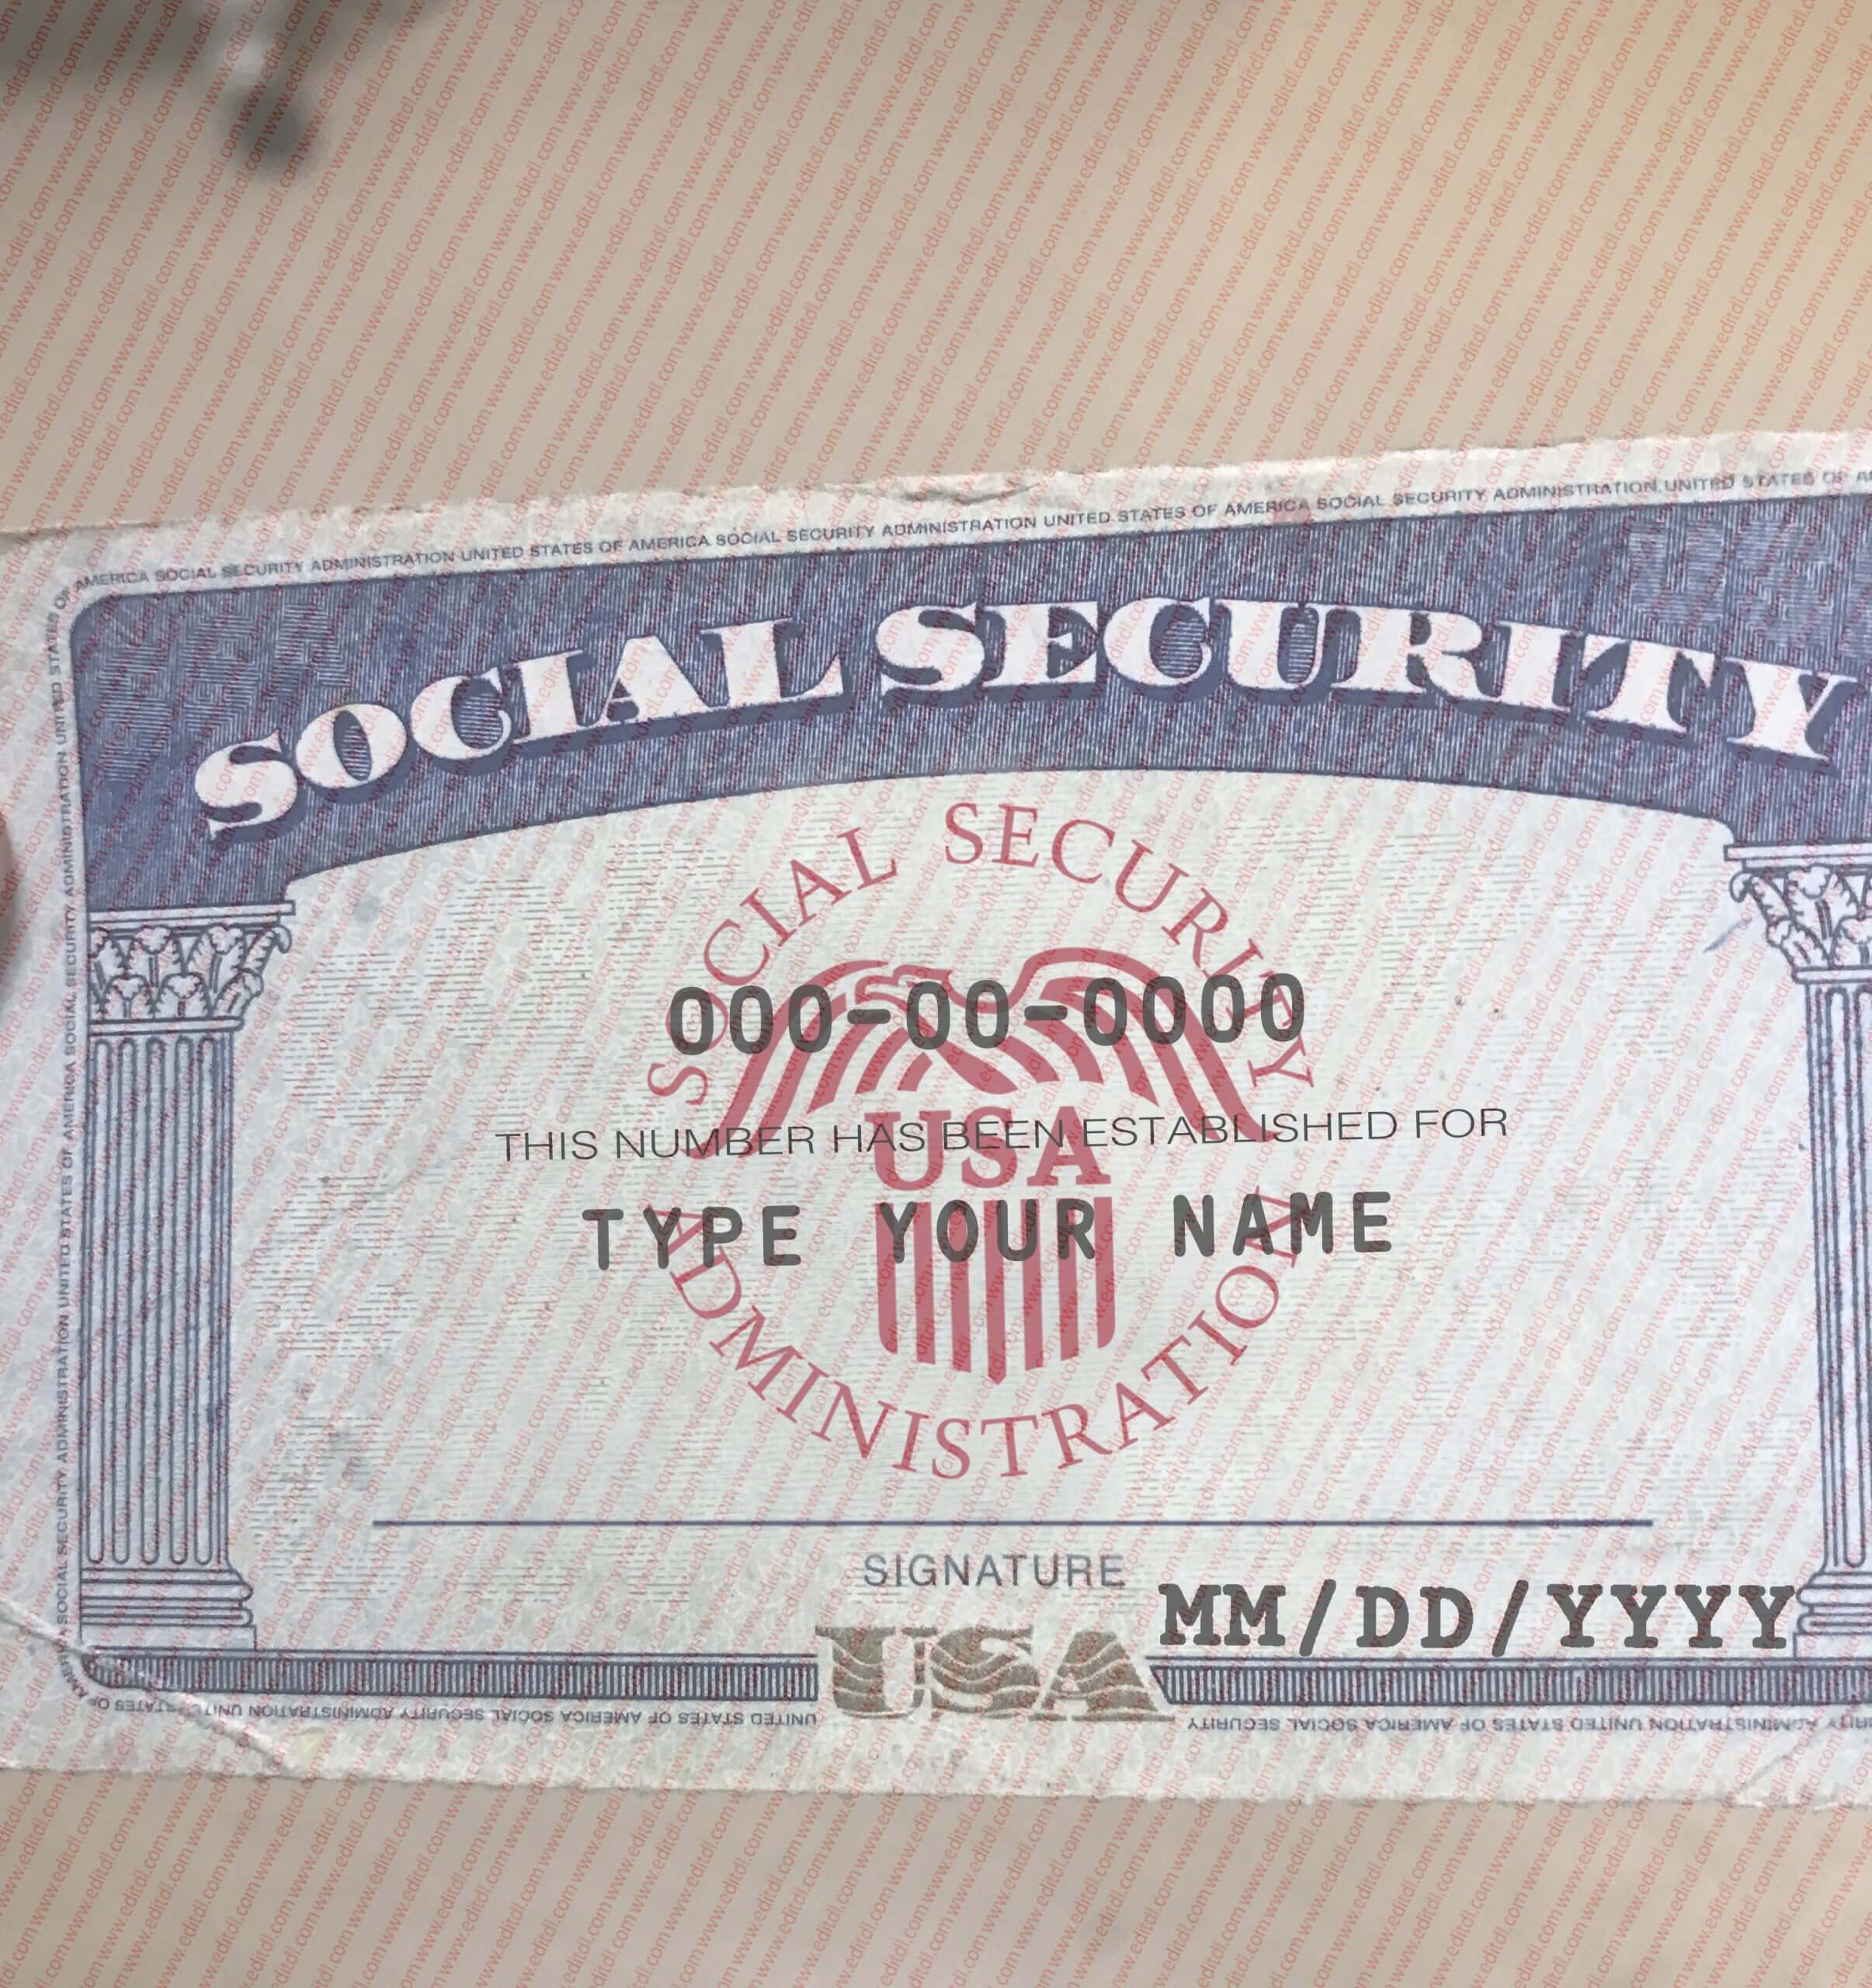 Social Security Card Template 03 - EDIT SSC